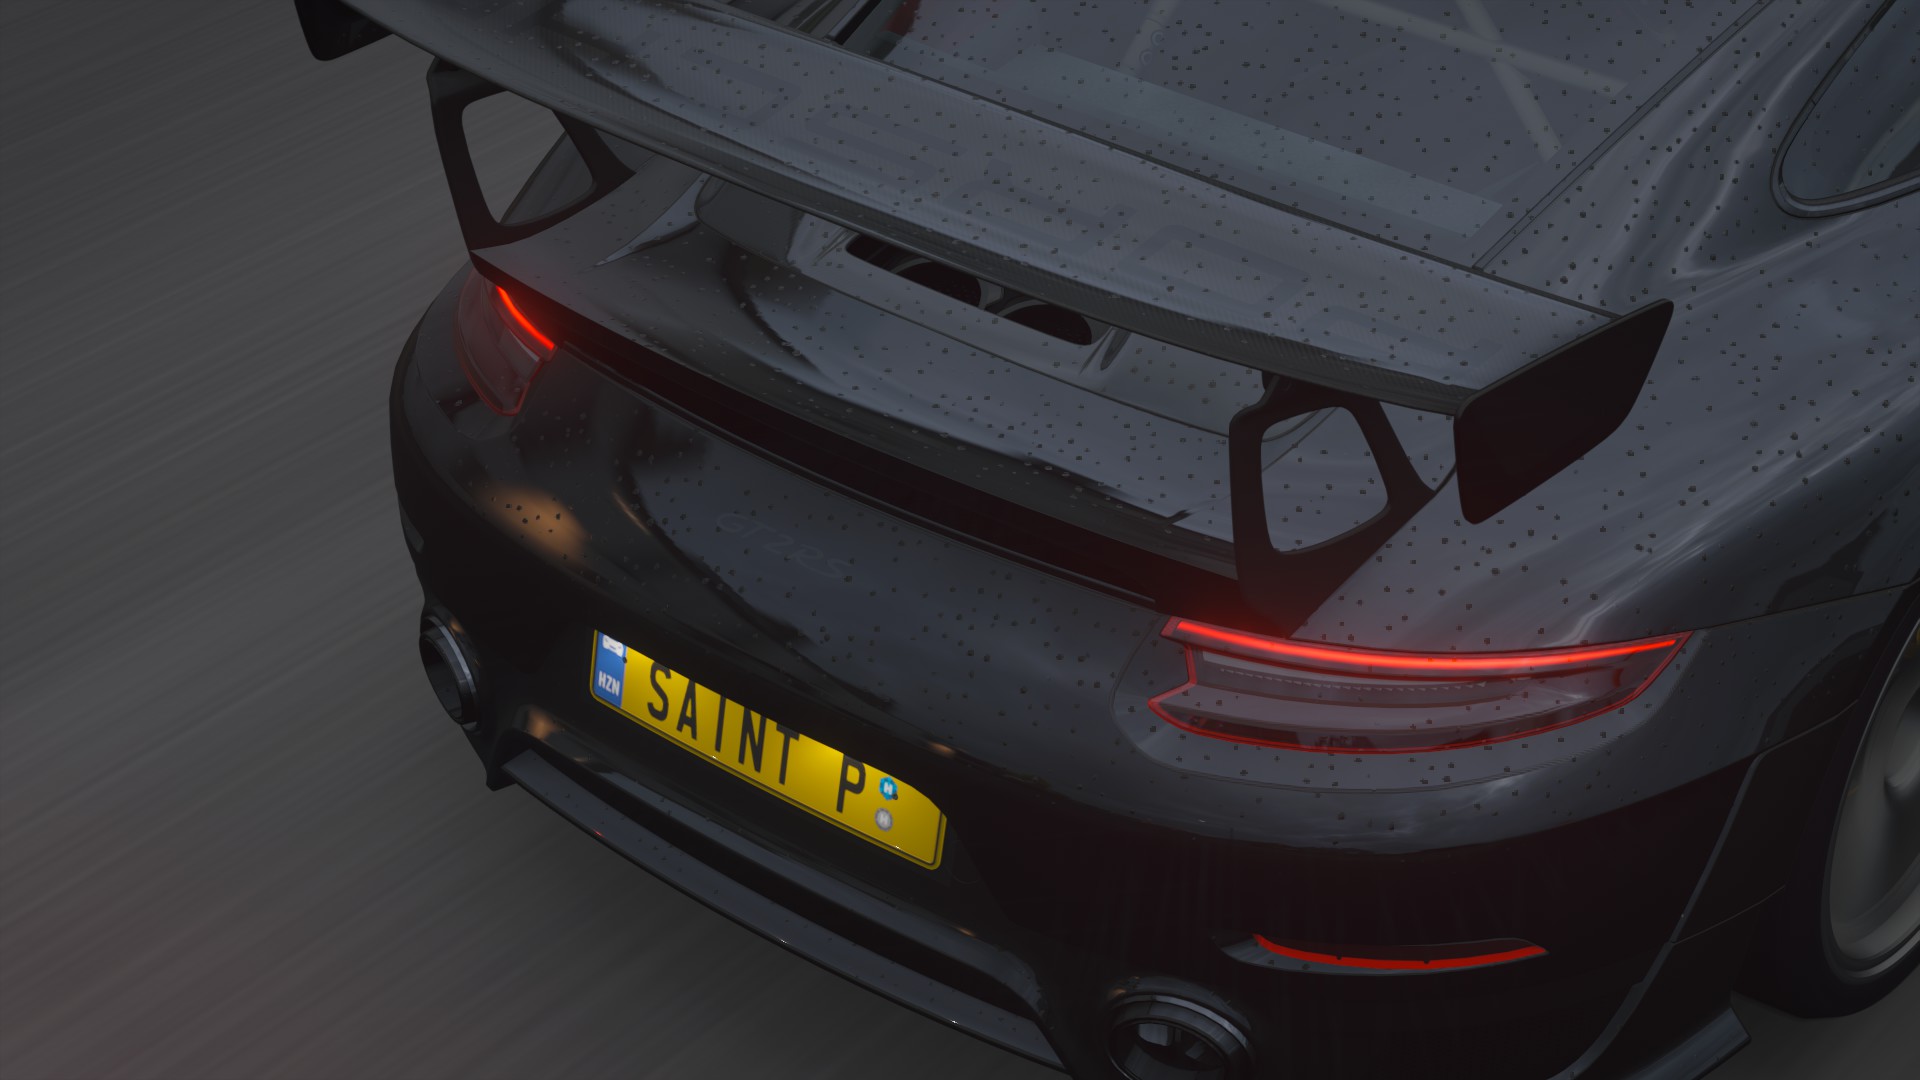 Motion Blur Digital Art CGi Car Vehicle Porsche Forza Forza Horizon 4 Taillights Rear View Licence P 1920x1080